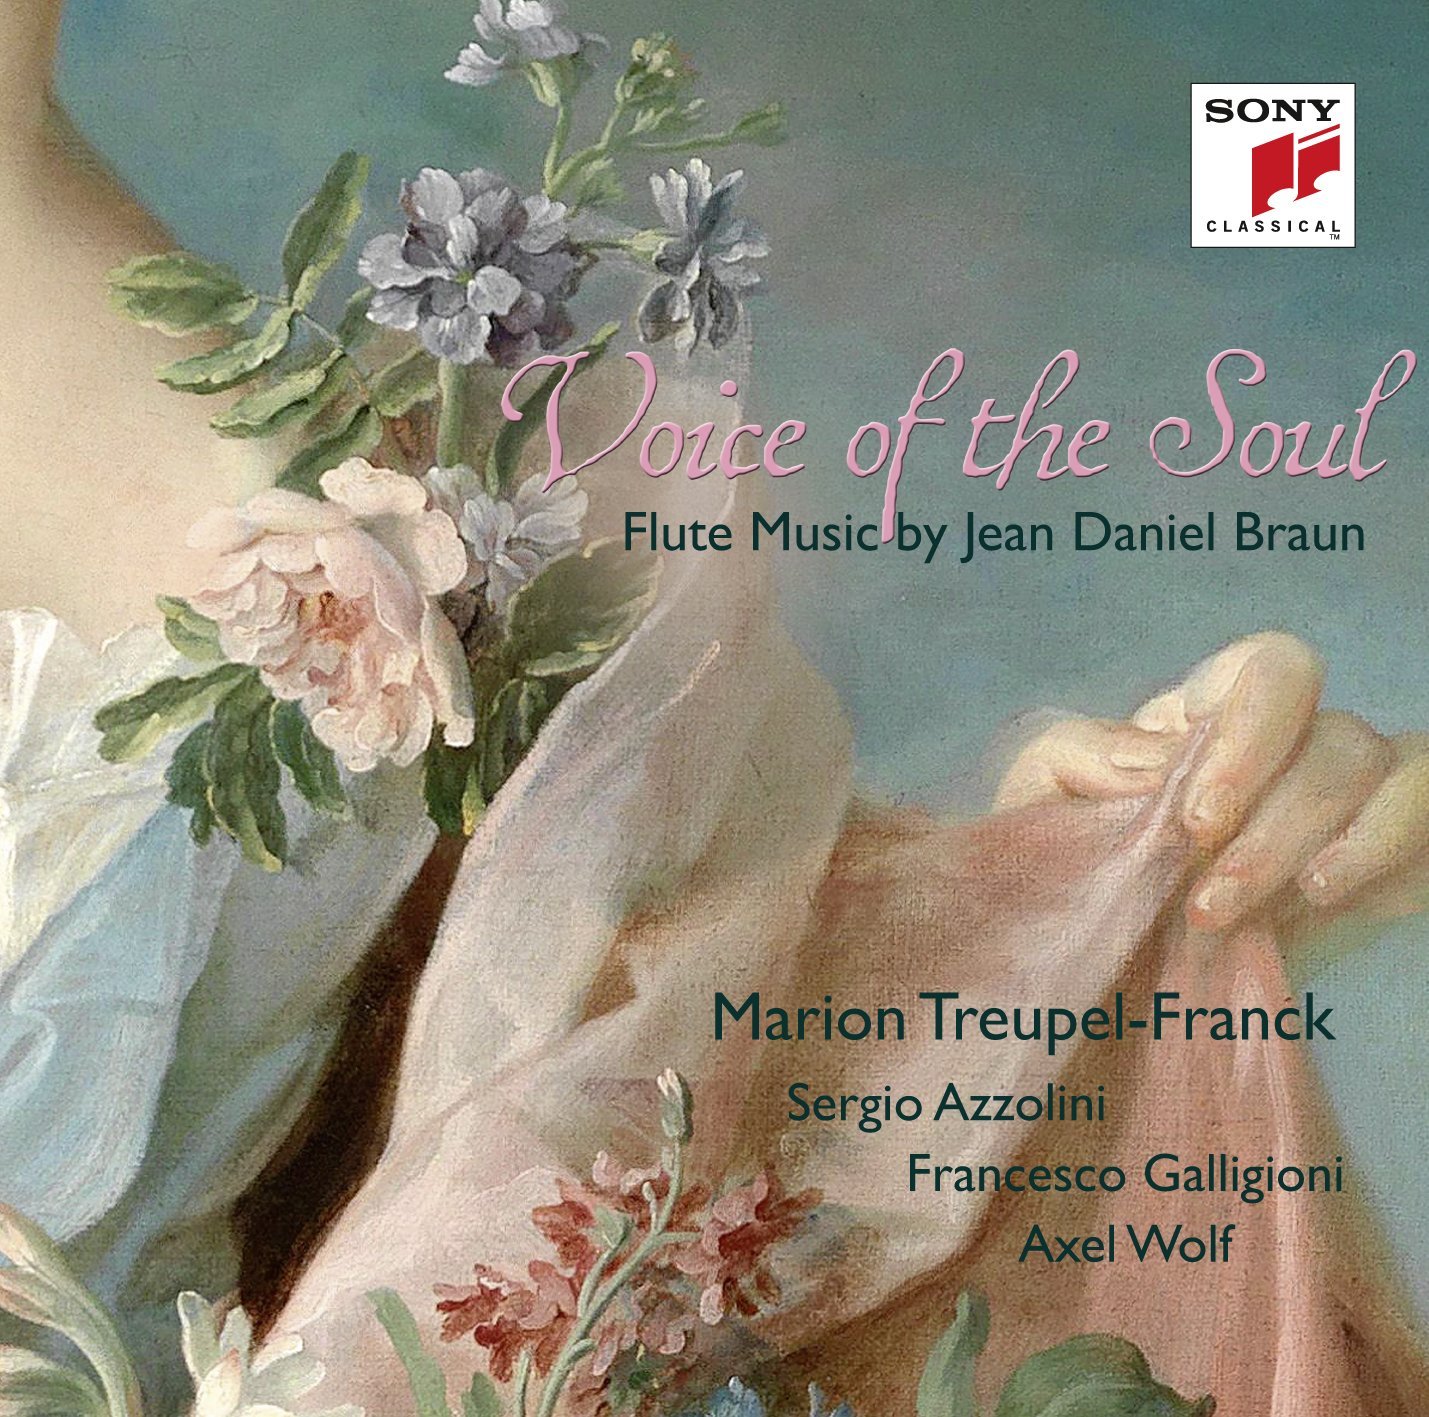 Marion Treupel-Franck - Voice of the Soul - Flute Music by Jean Daniel Braun (2017) [Qobuz FLAC 24bit/48kHz]